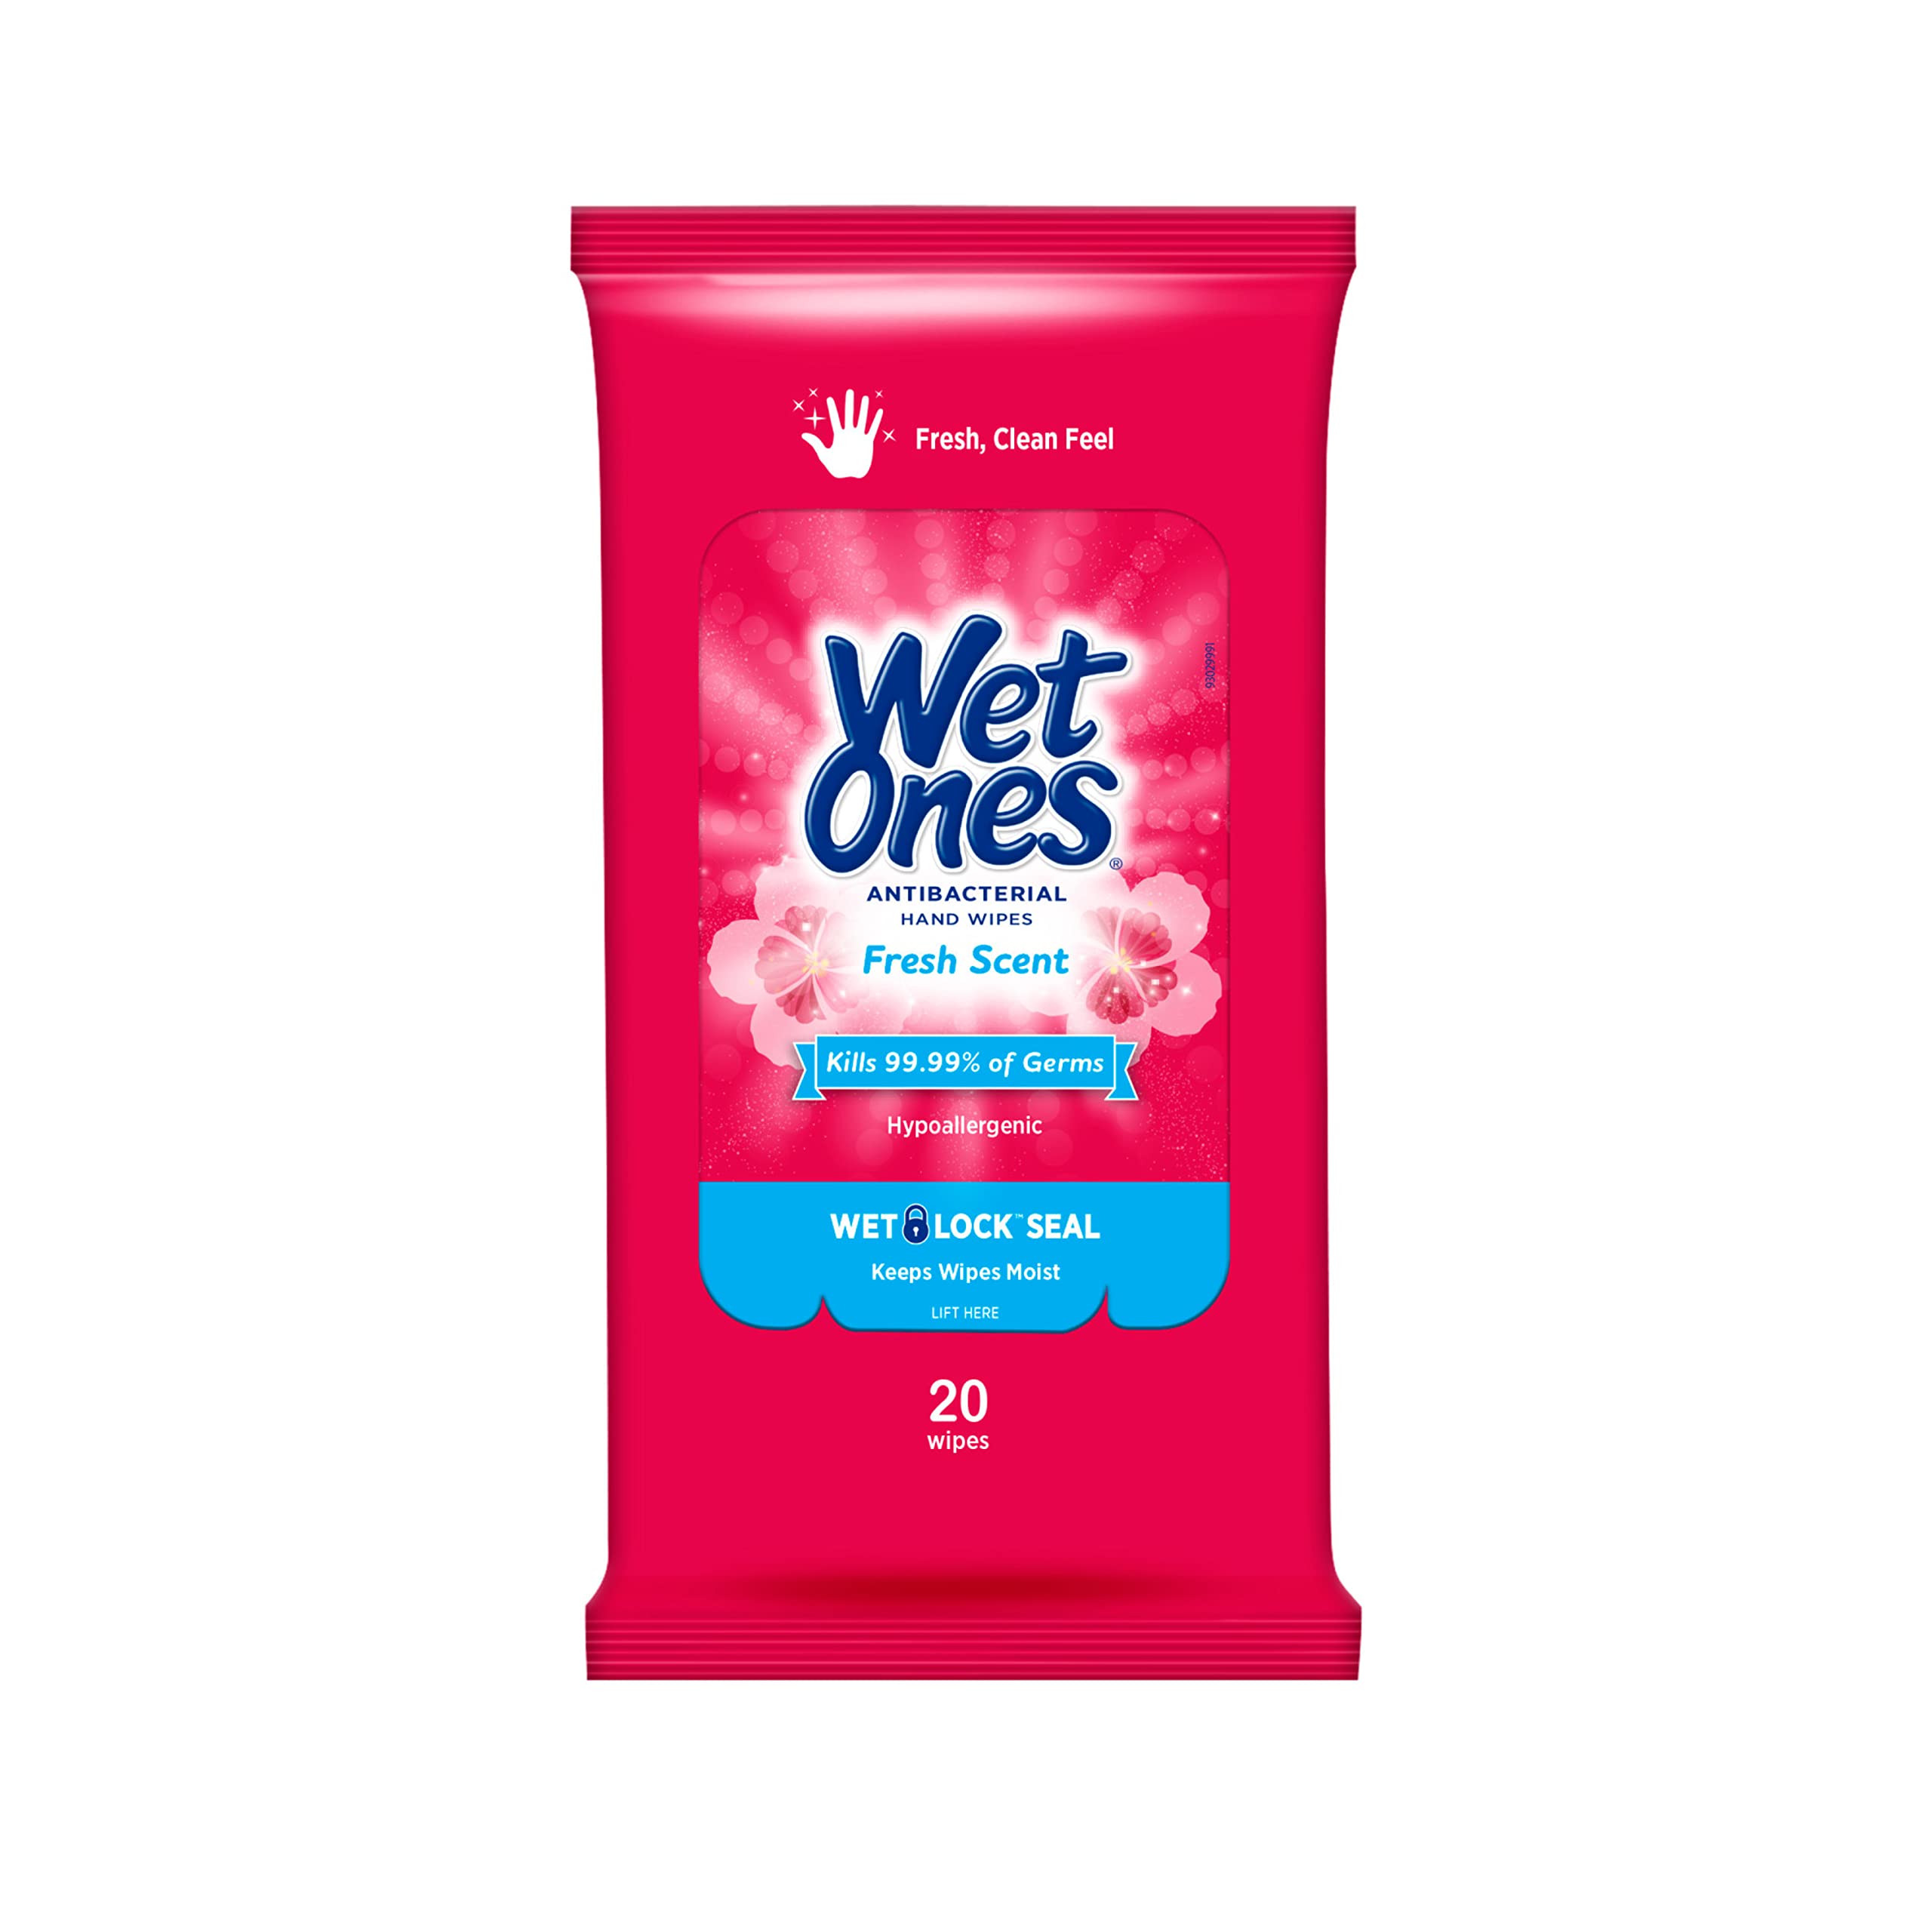 Wet Ones Antibacterial Hand Wipes, Fresh Scent, 20 Count (Pack of 1)